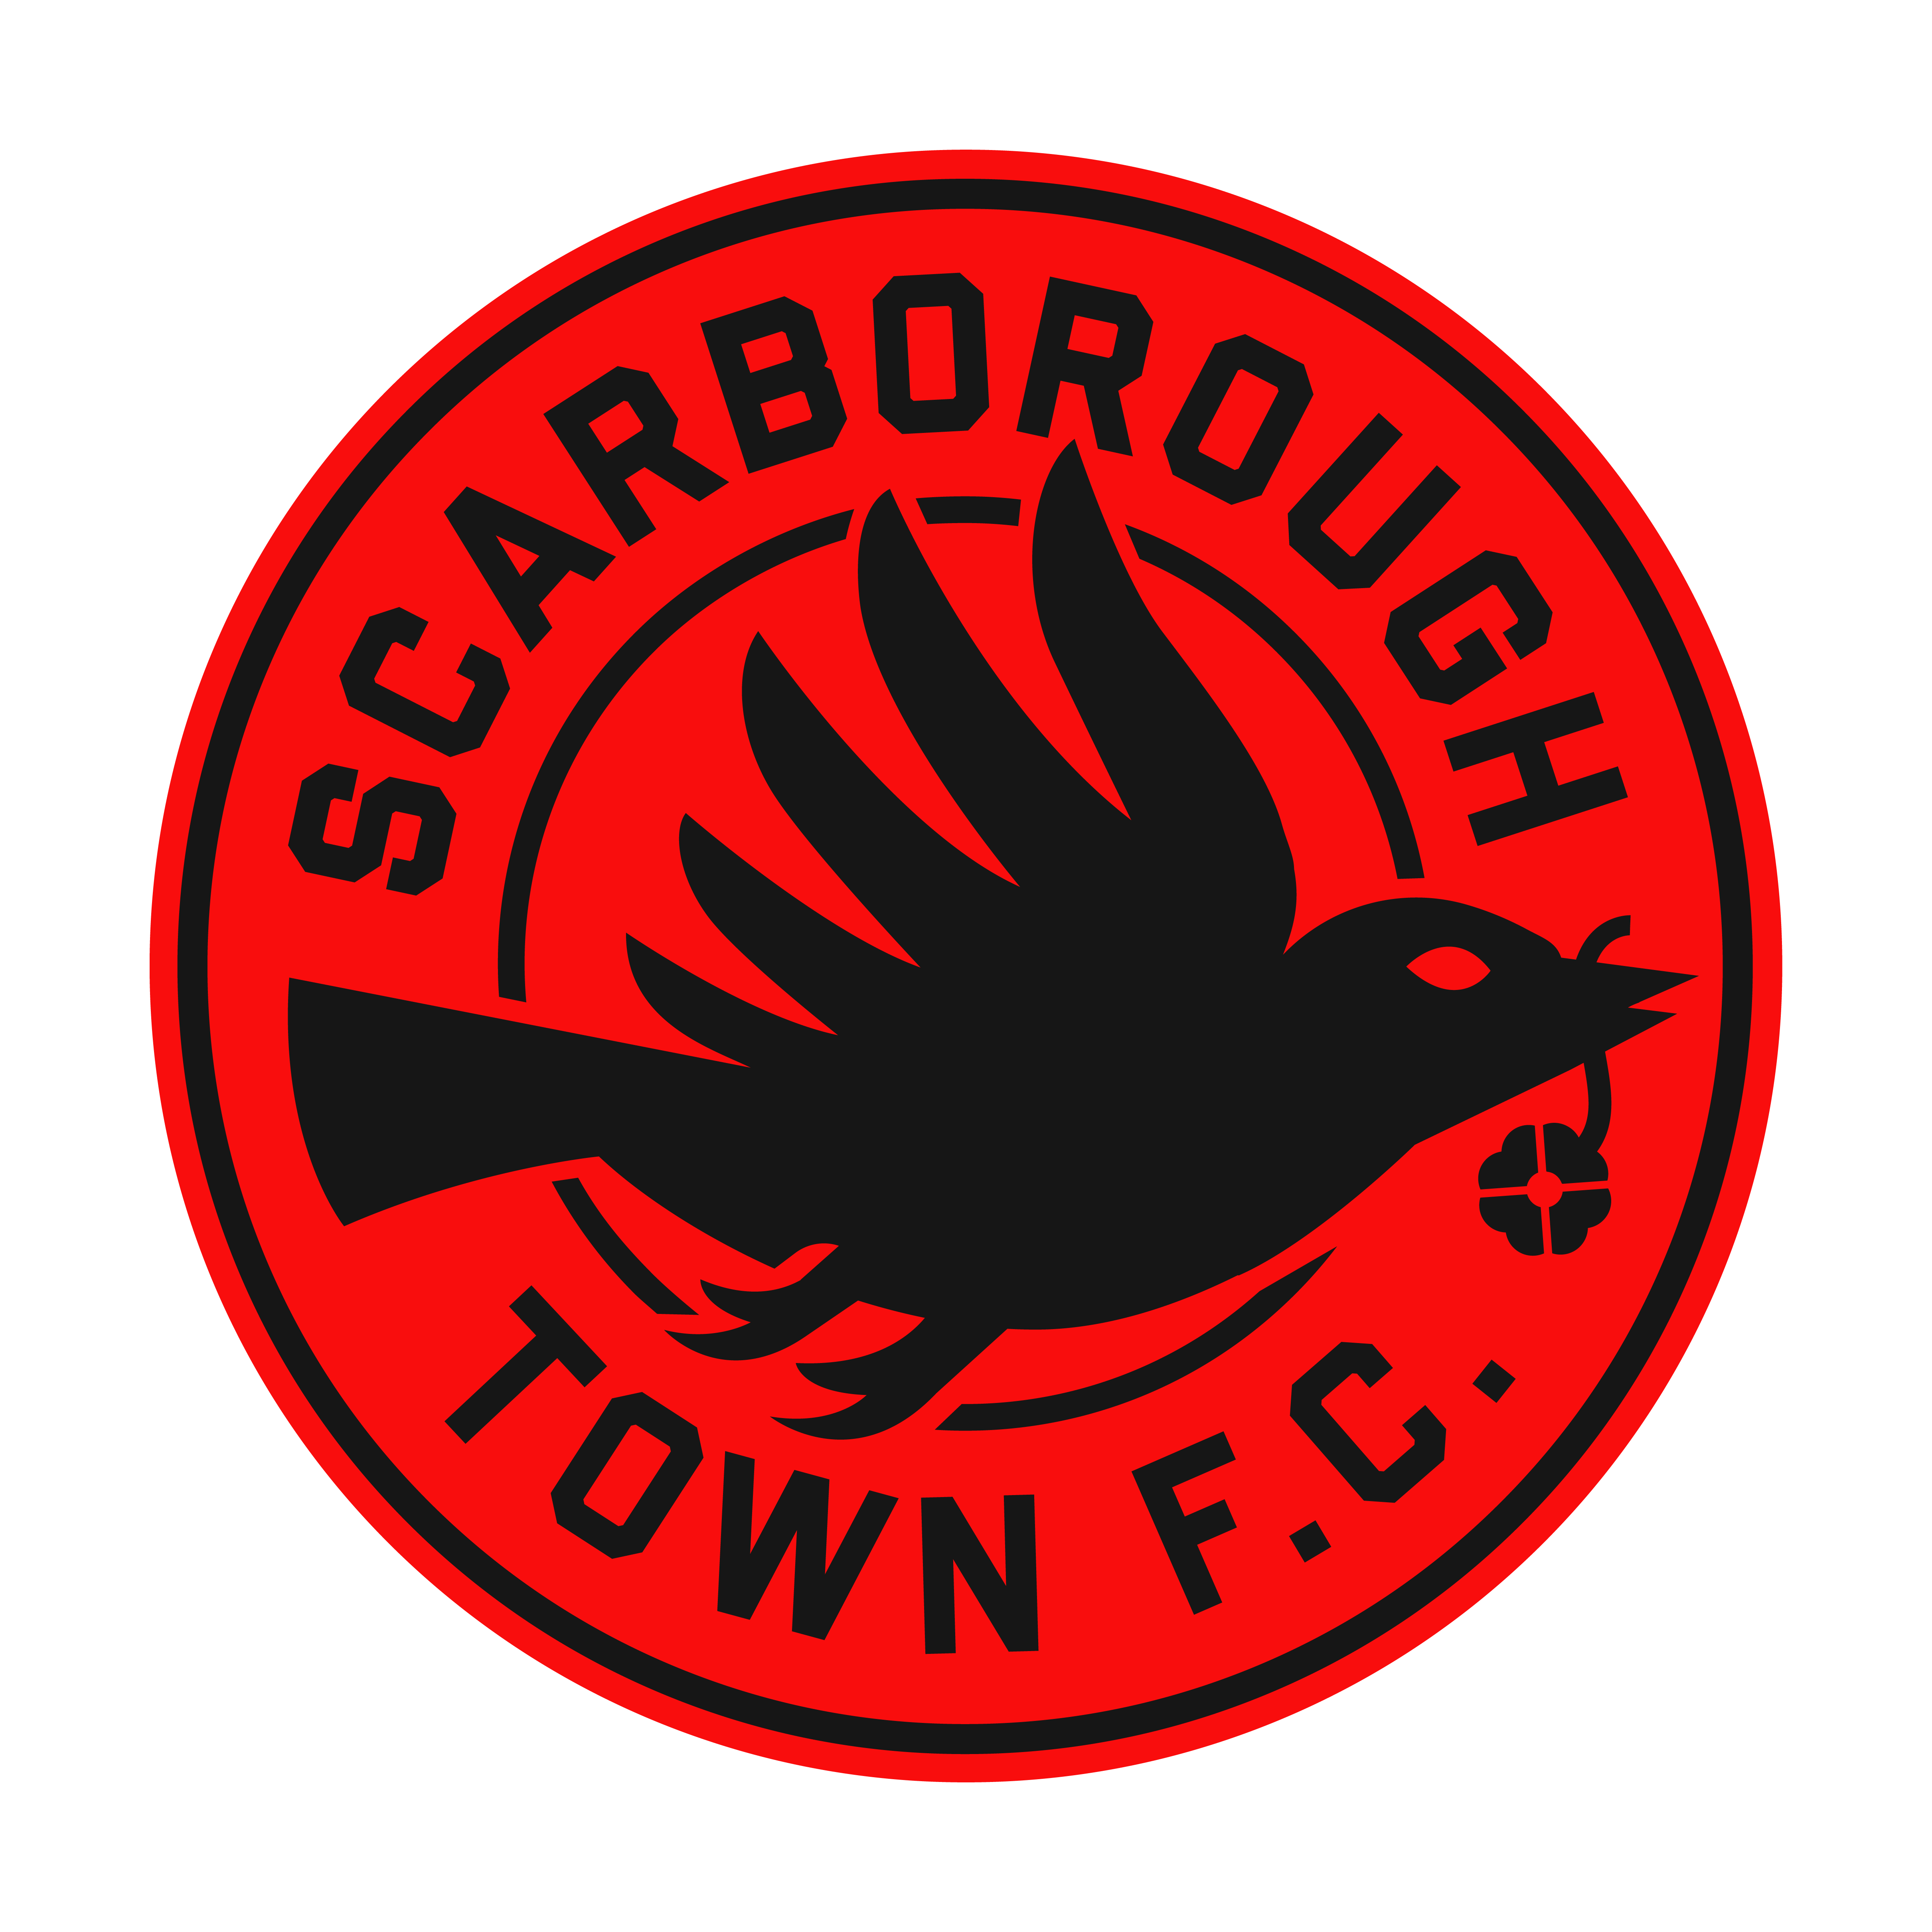 Scarborough Town FC